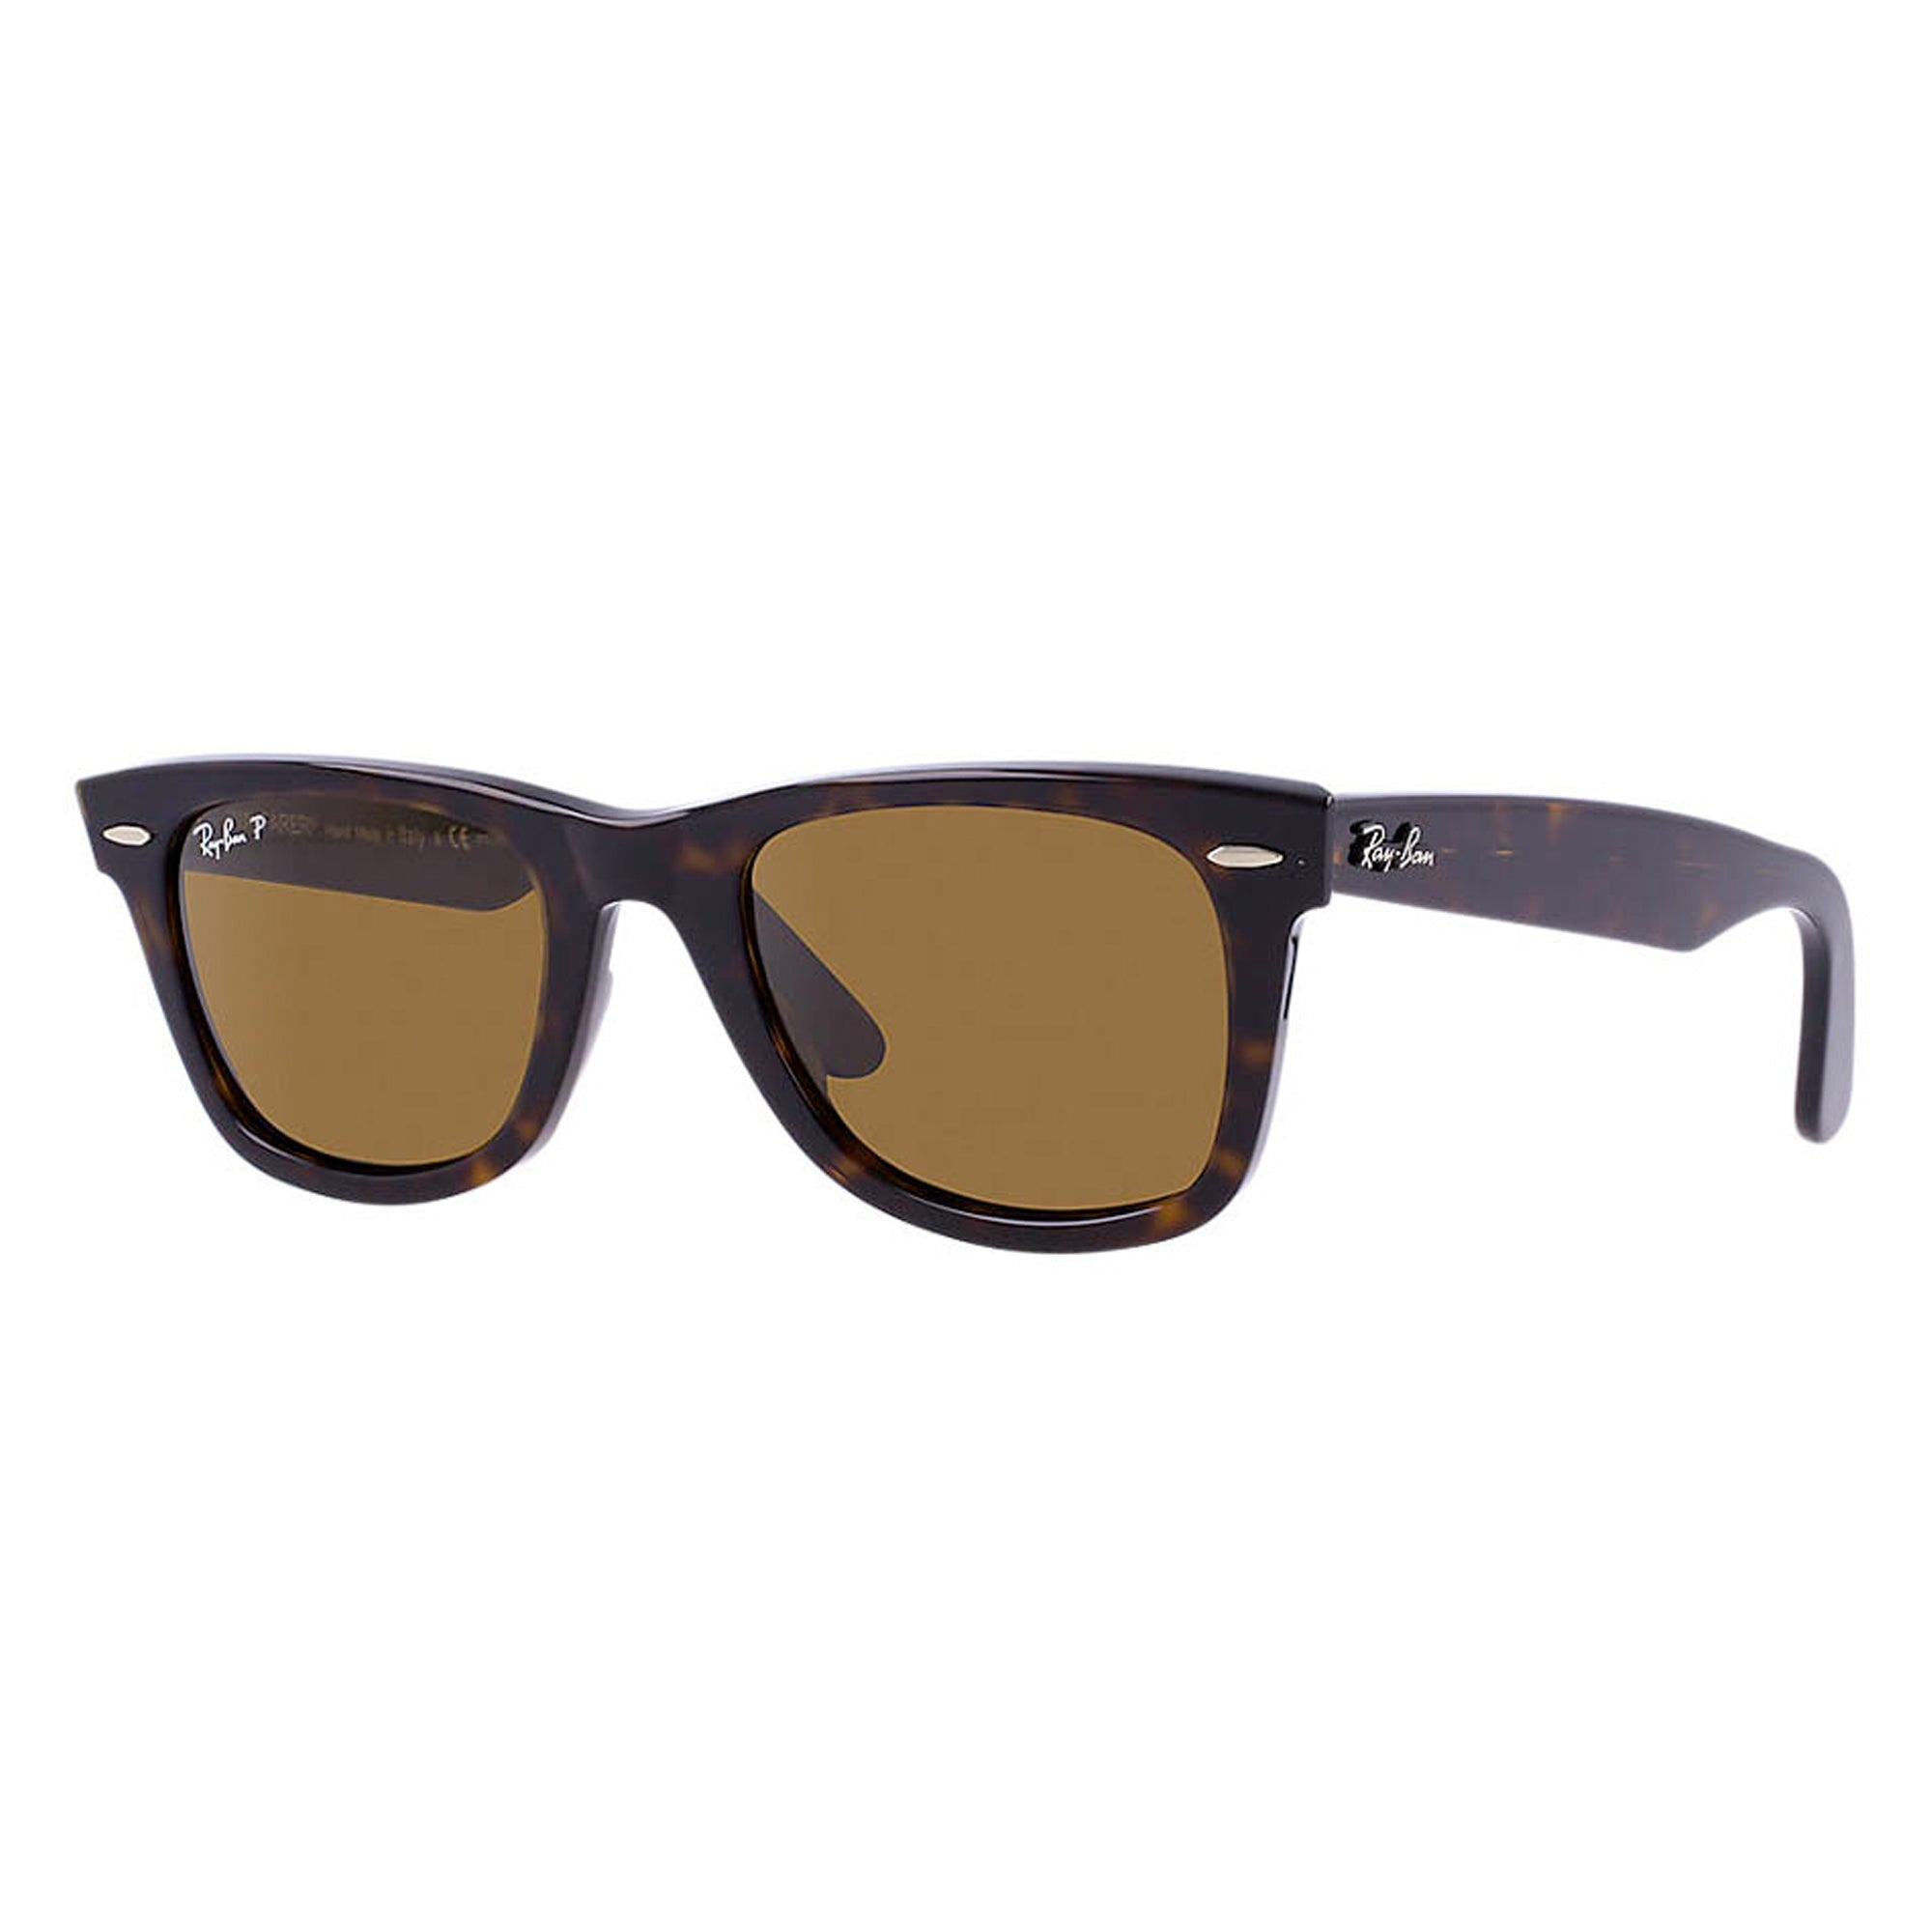 Ray-Ban Original Wayfarer Classic Men's Polarized Sunglasses